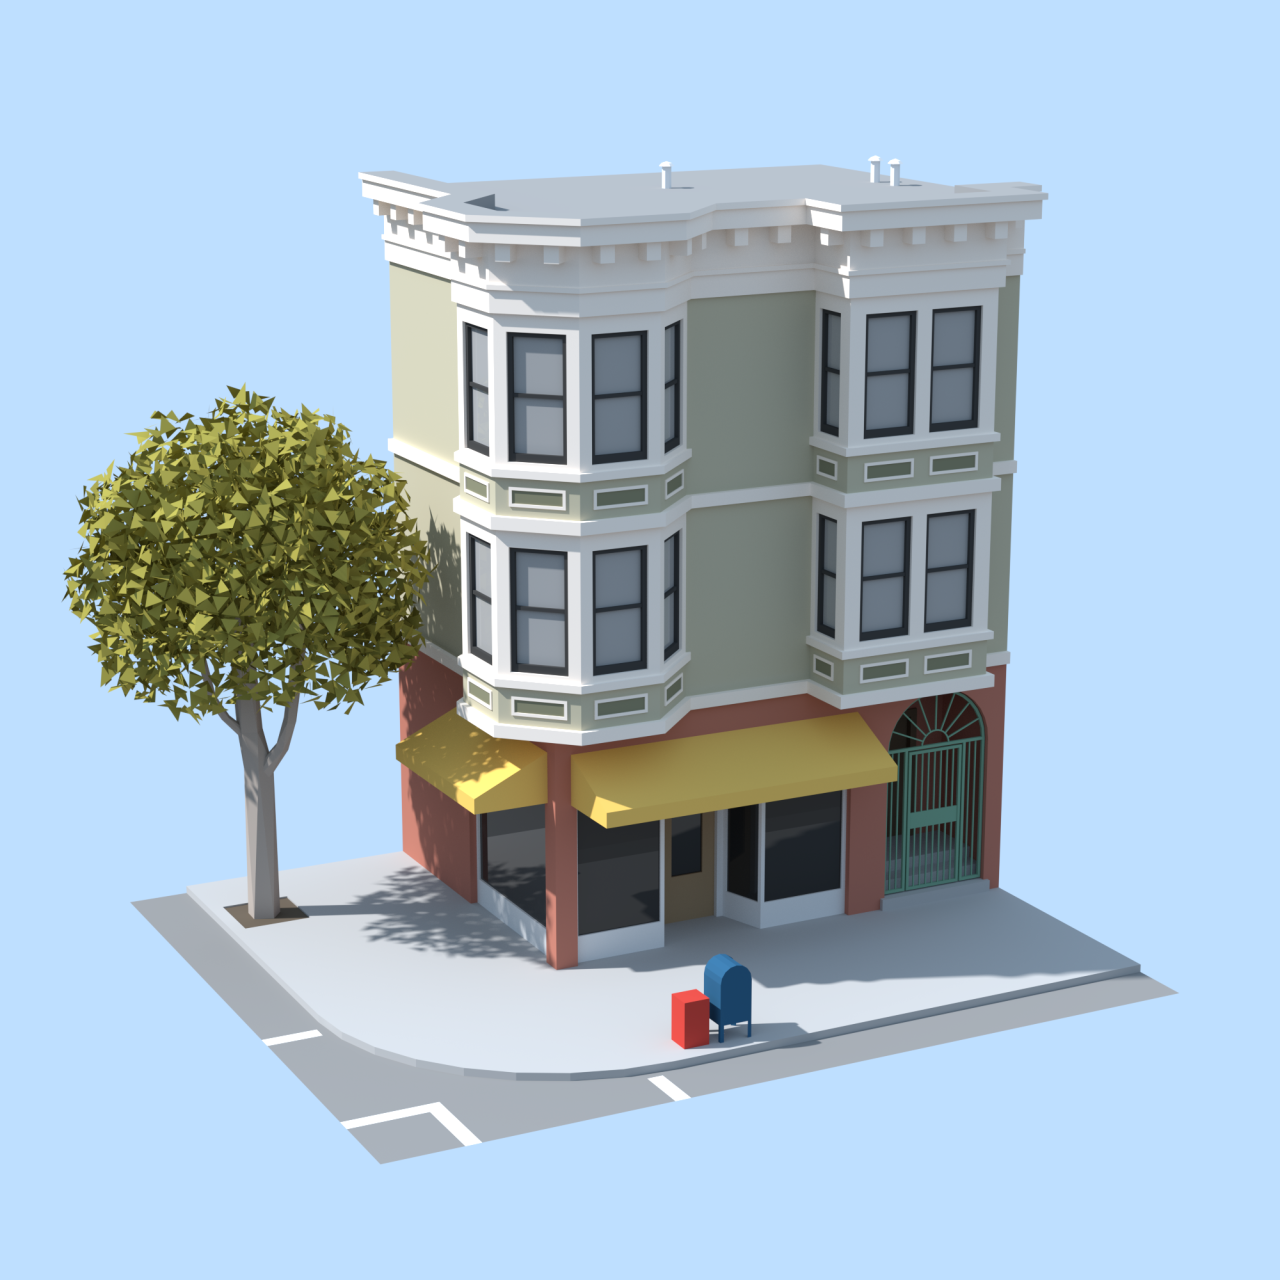 San Francisco Street Corner